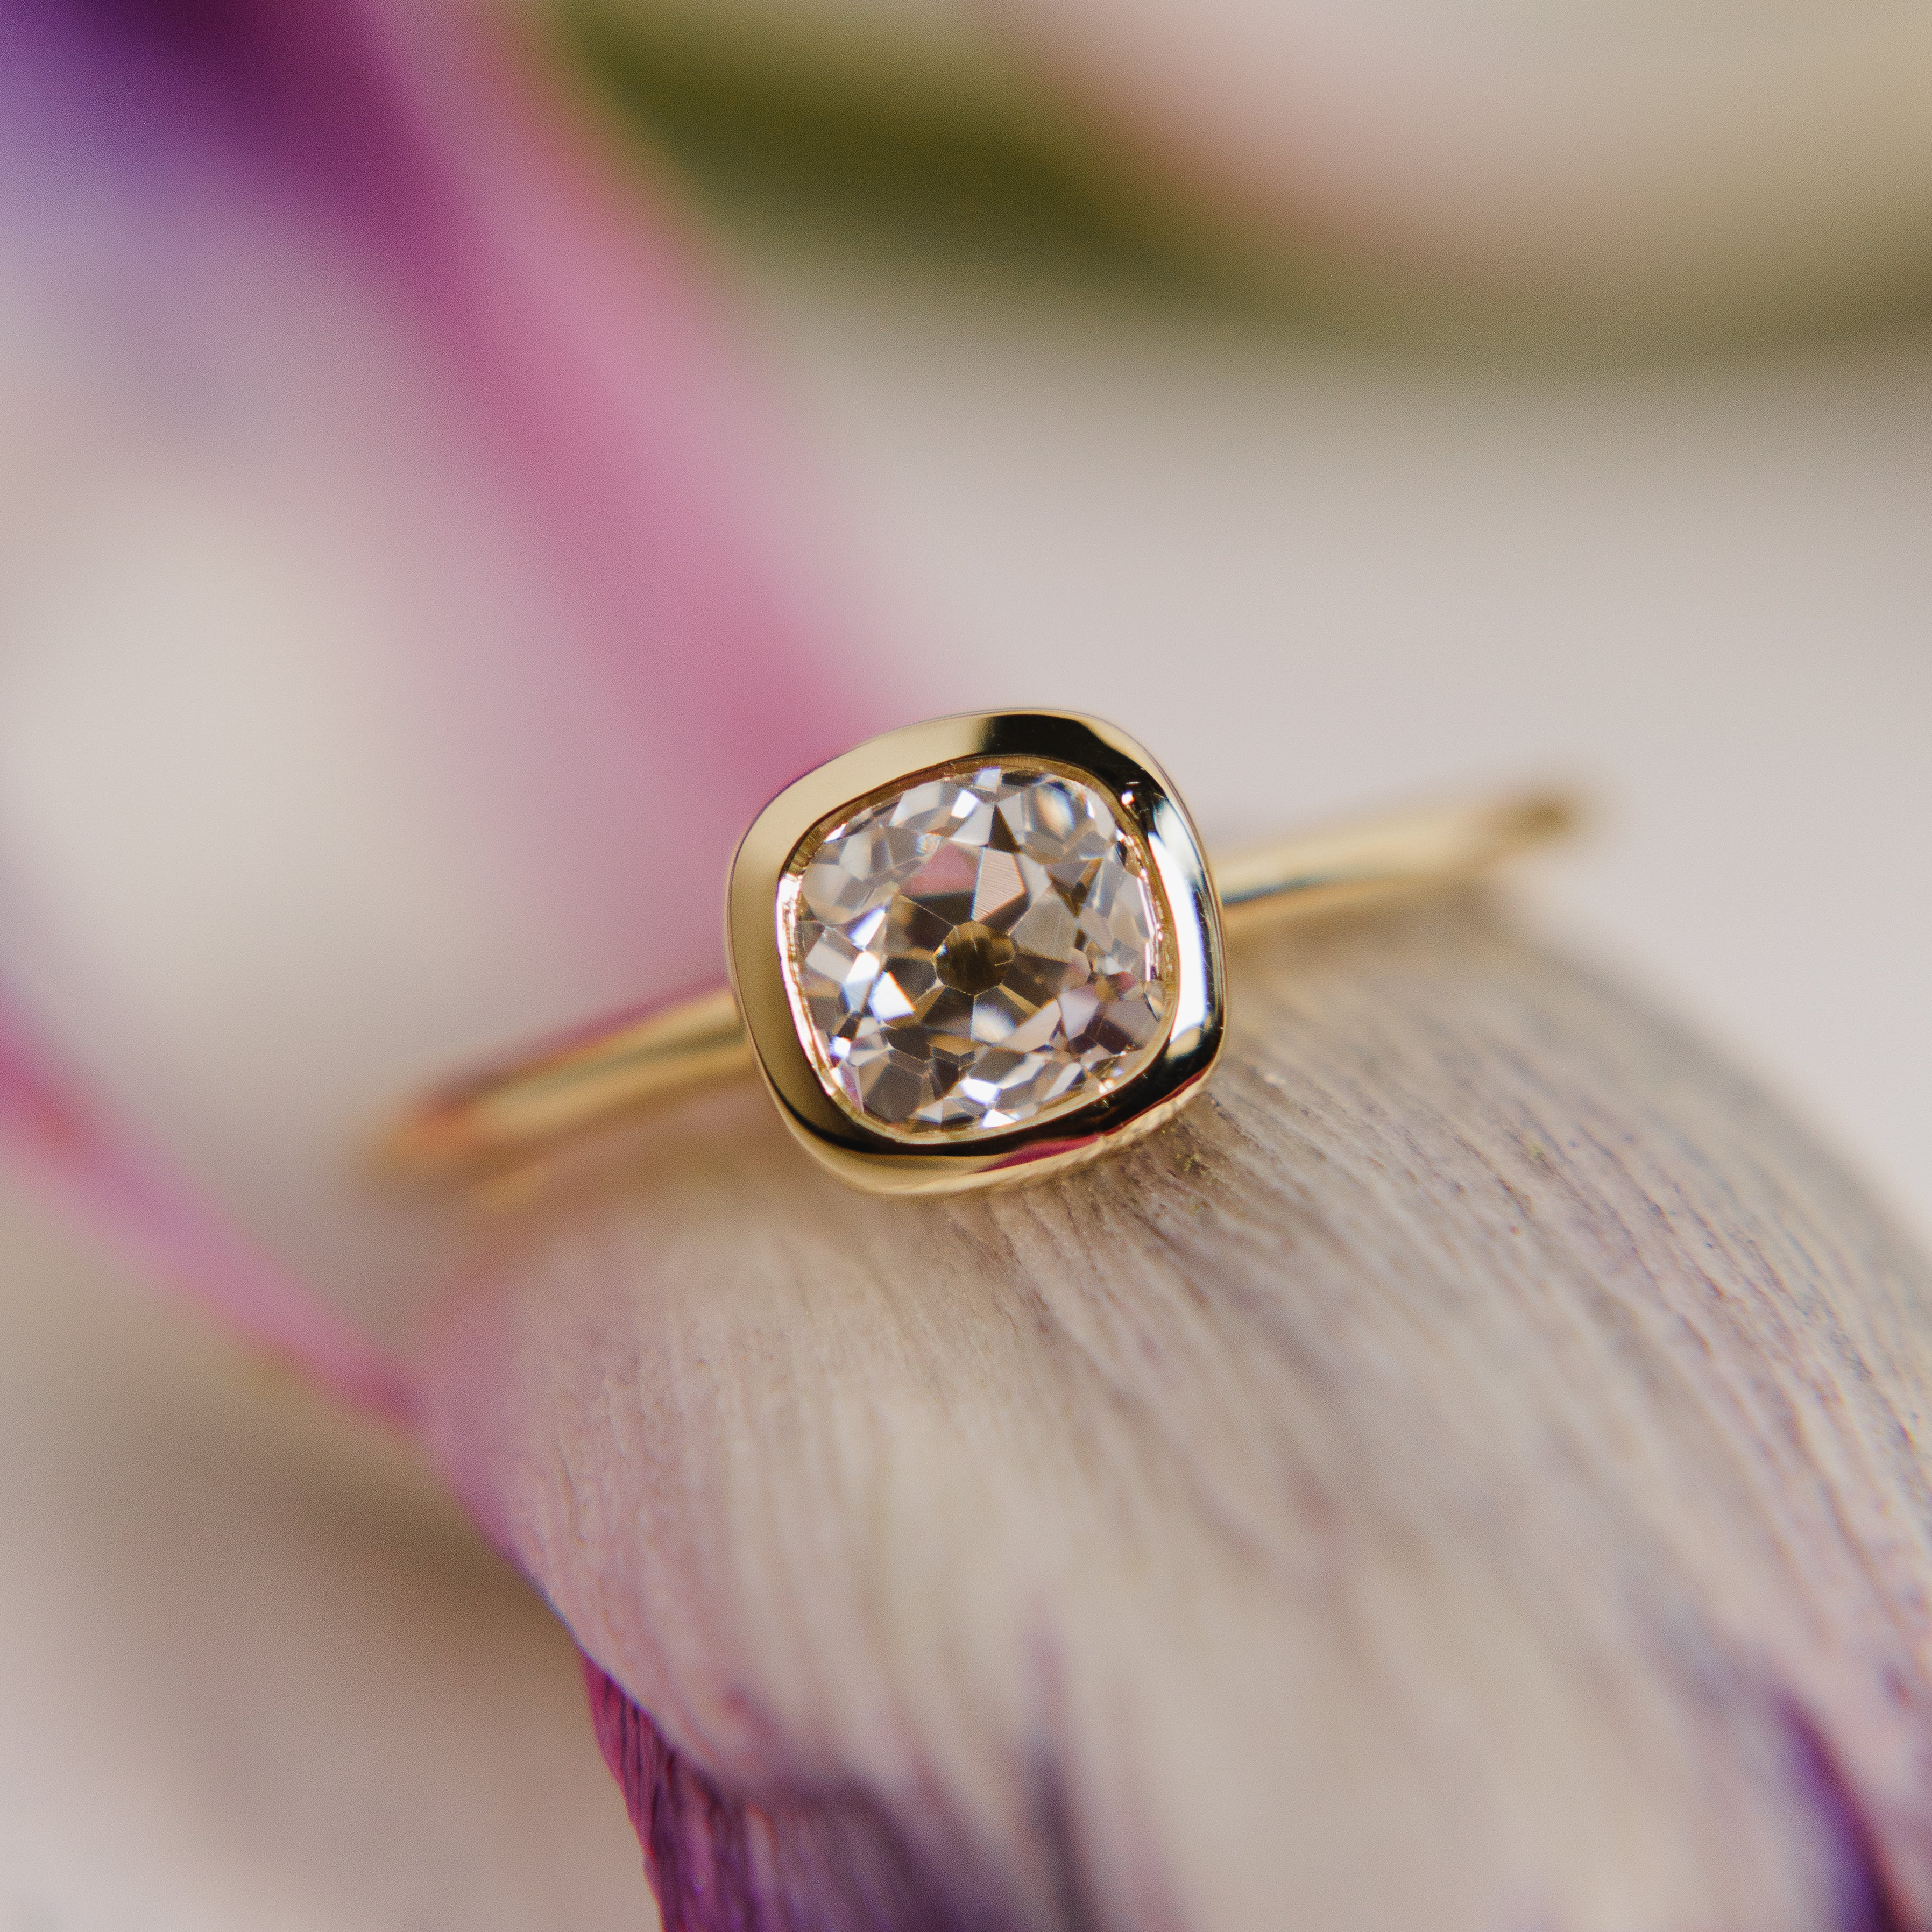 Platinum engagement ring set with a 3.21 carat mine cut diamond